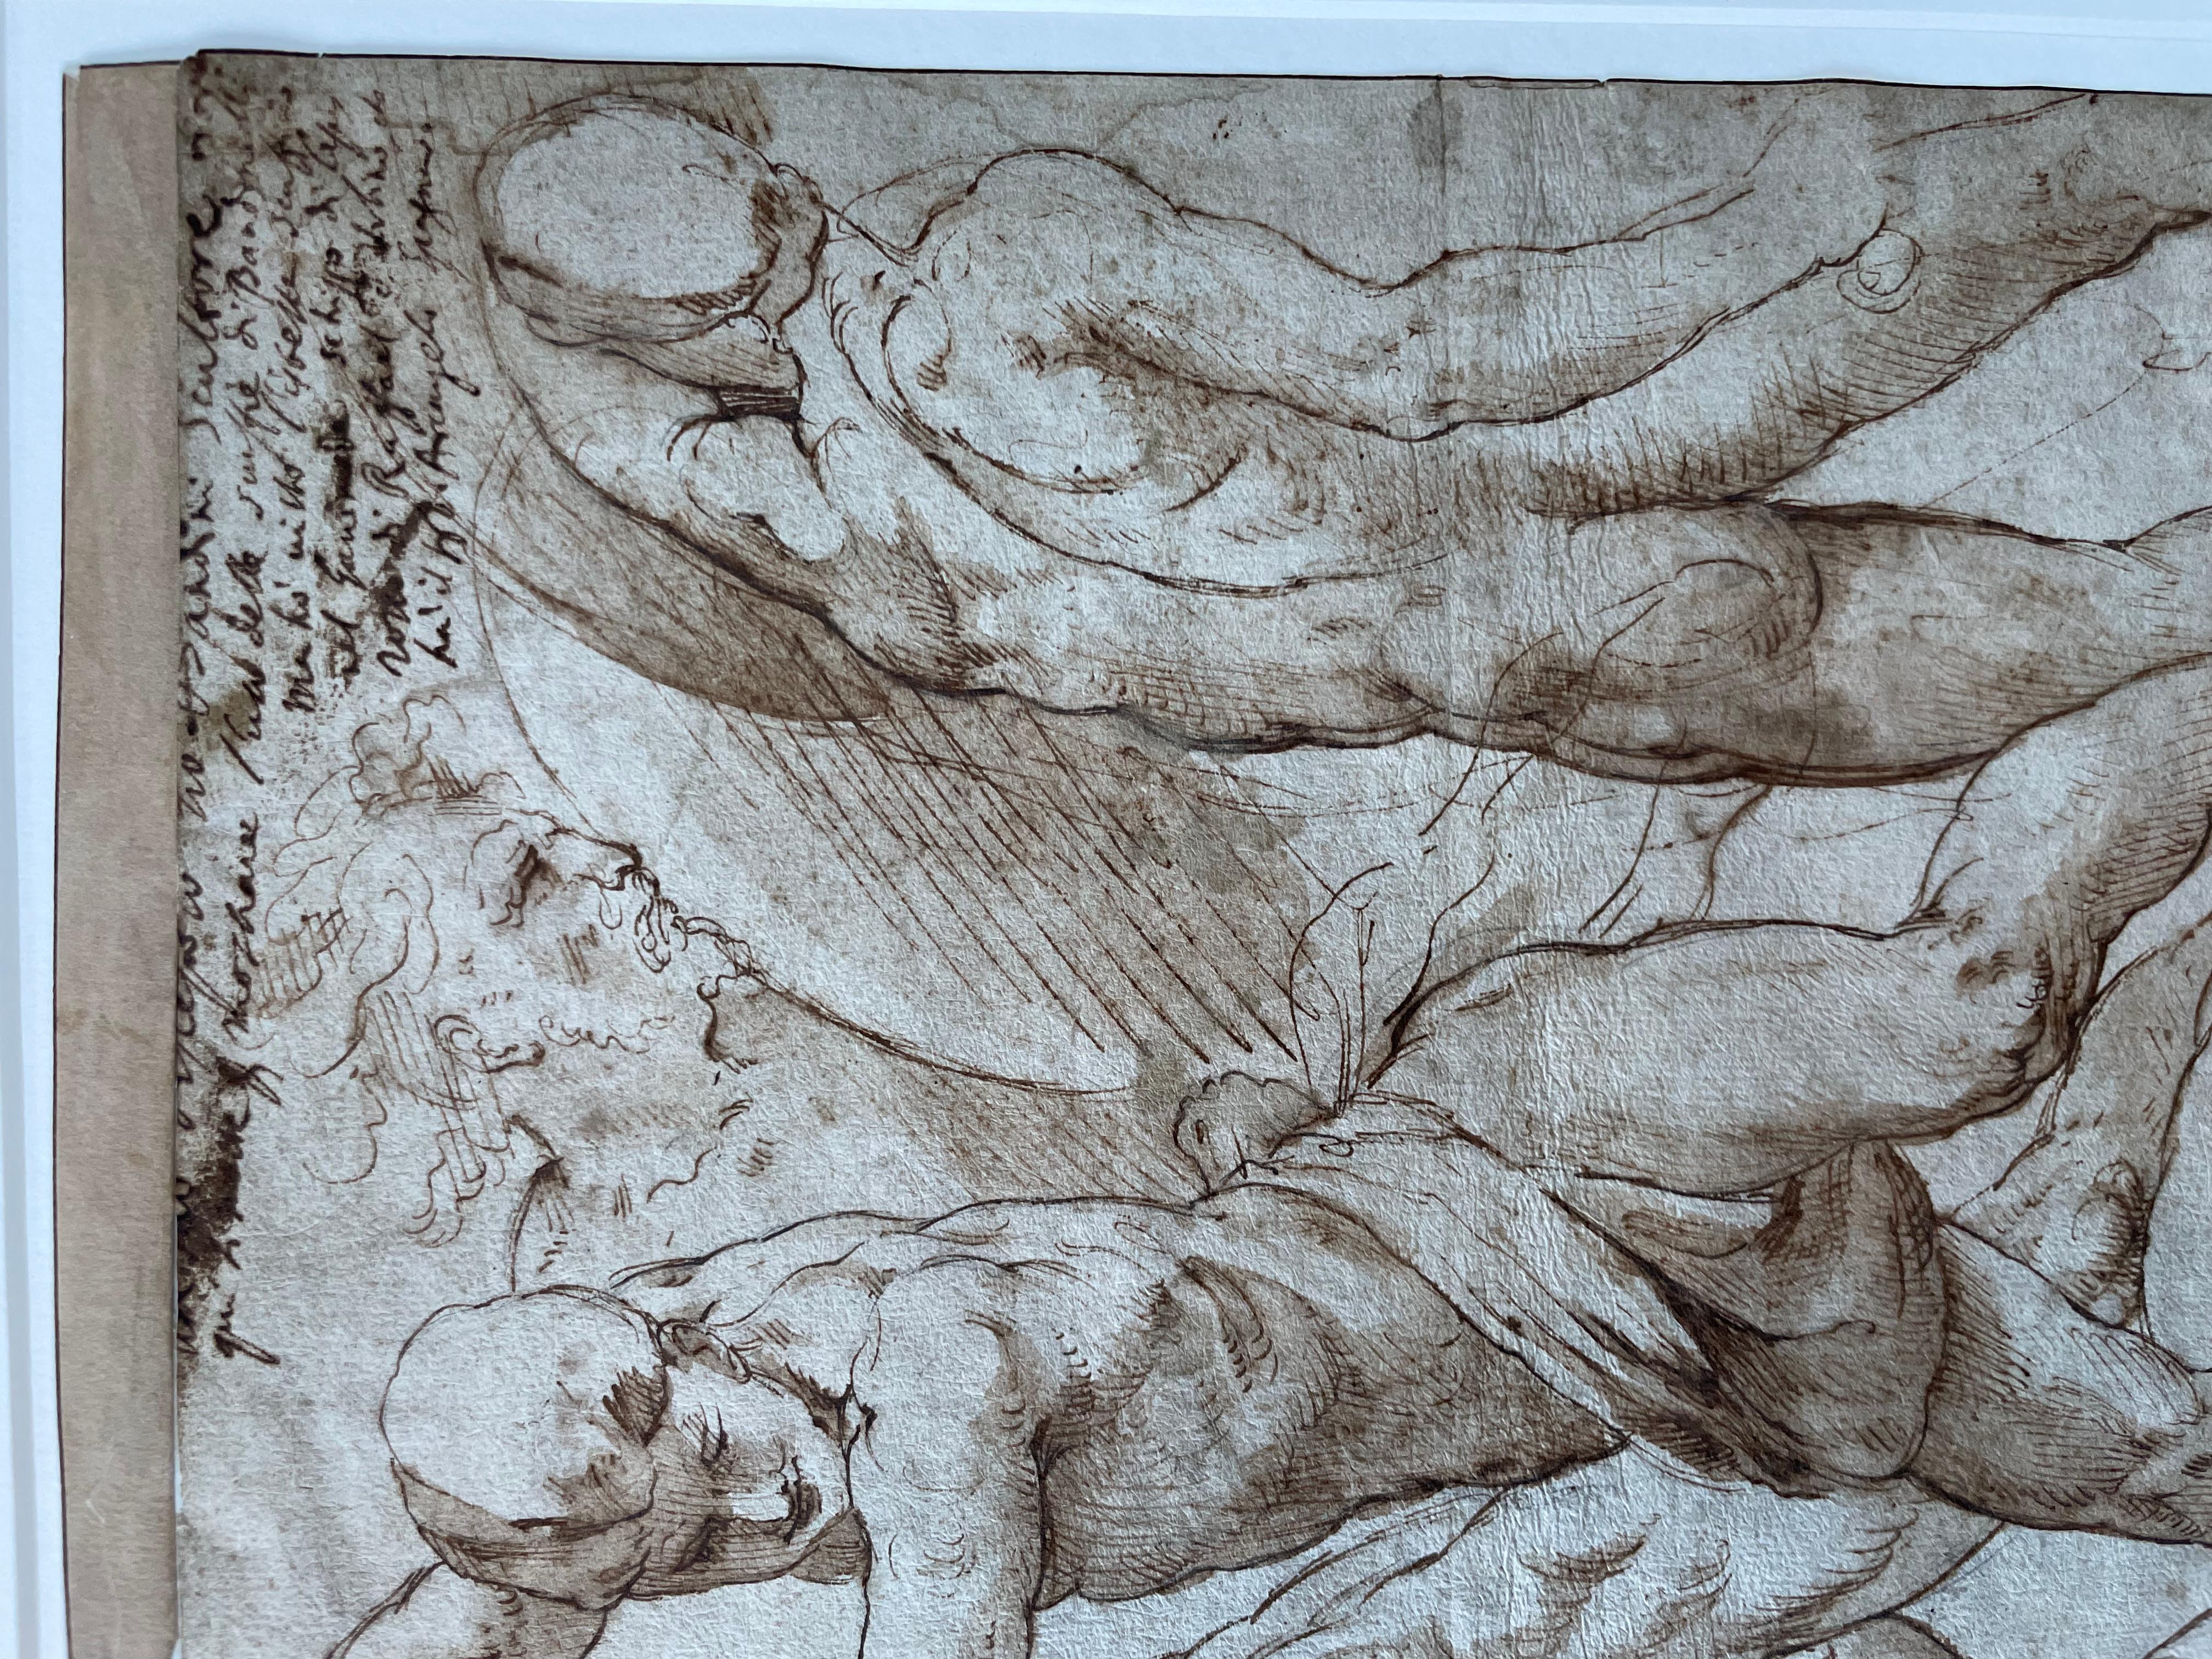 Jacopo Zanguidi Dit Bertoja (1544 - 1574) - Important 16th Century Drawing For Sale 2